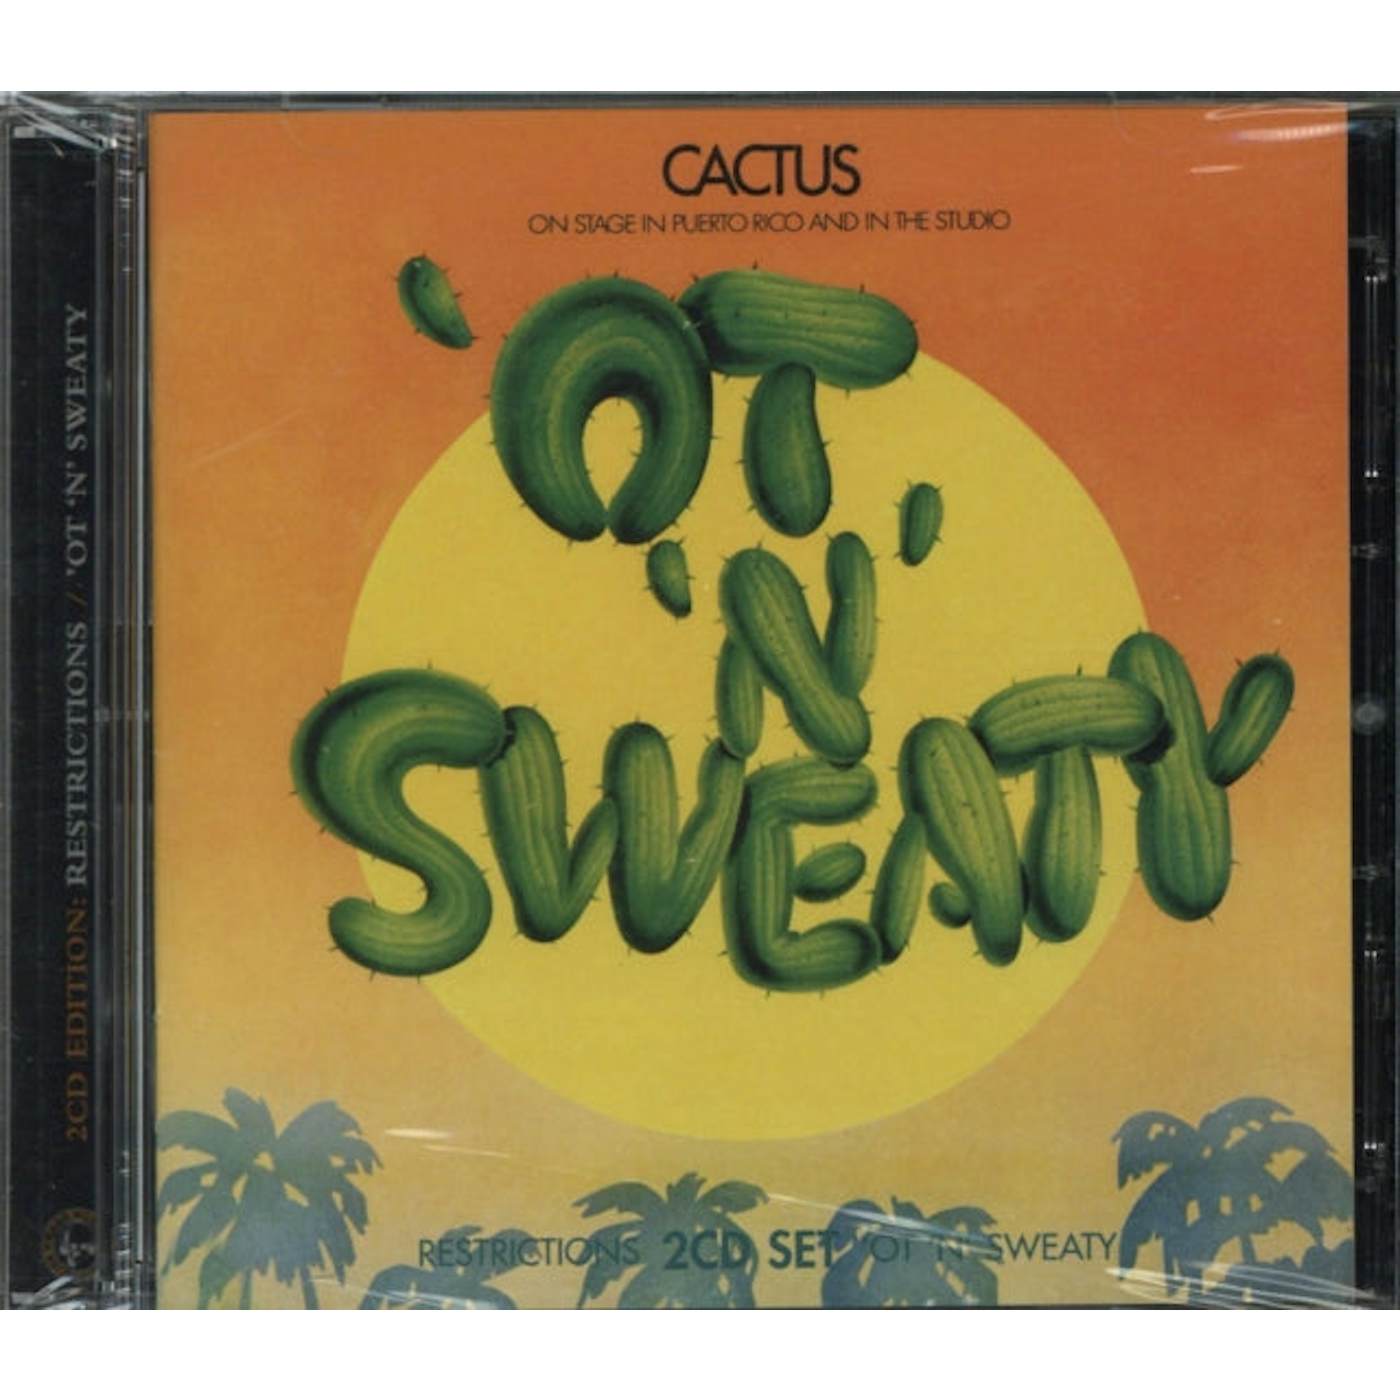 Cactus CD - Restrictions/'Ot 'N' Sweaty